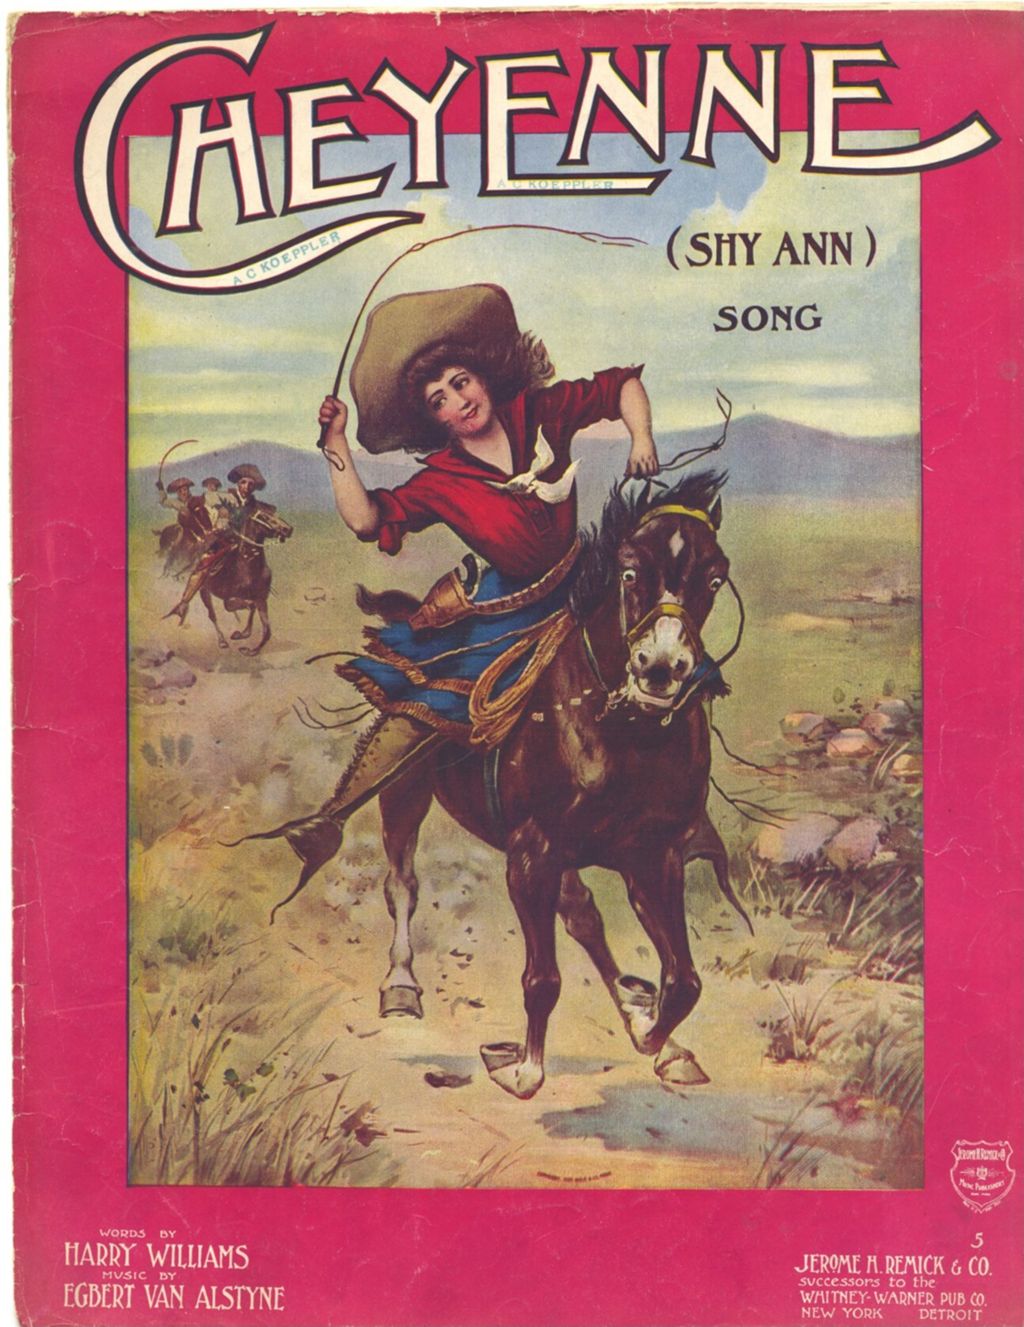 Miniature of Cheyenne (Shy Ann)